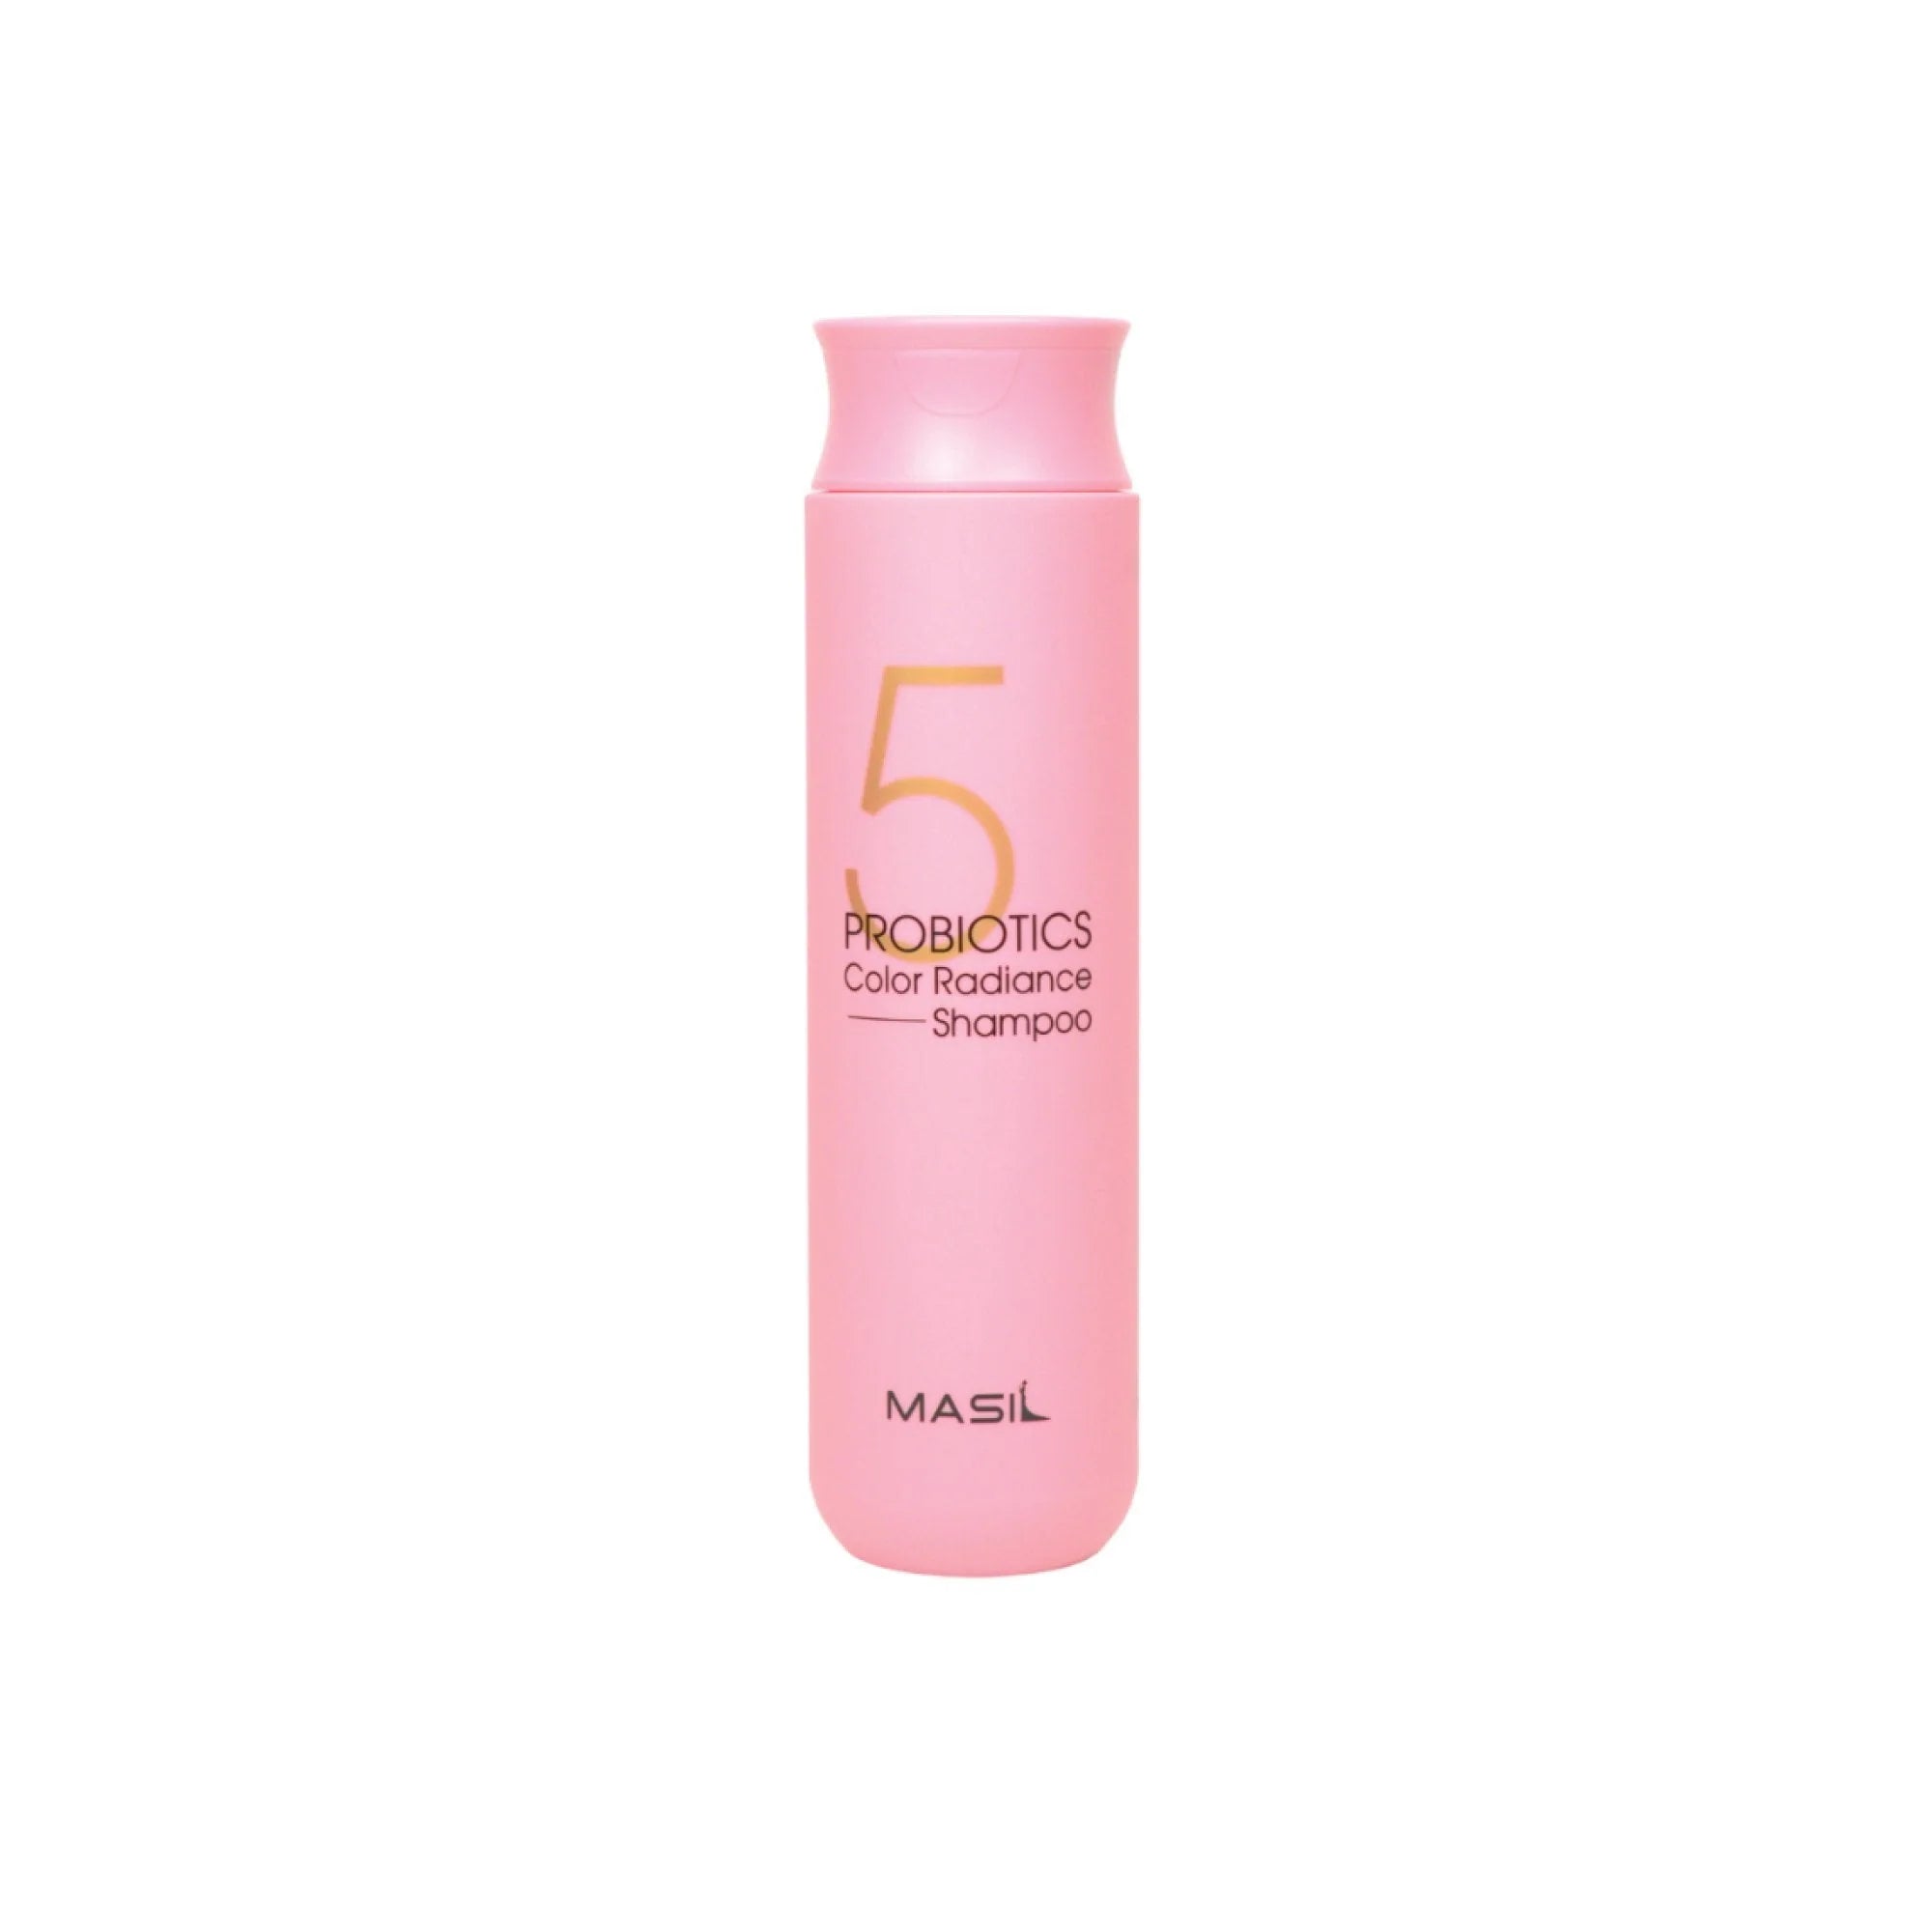 MASIL 5 Probiotics Color Radiance Shampoo 300ml